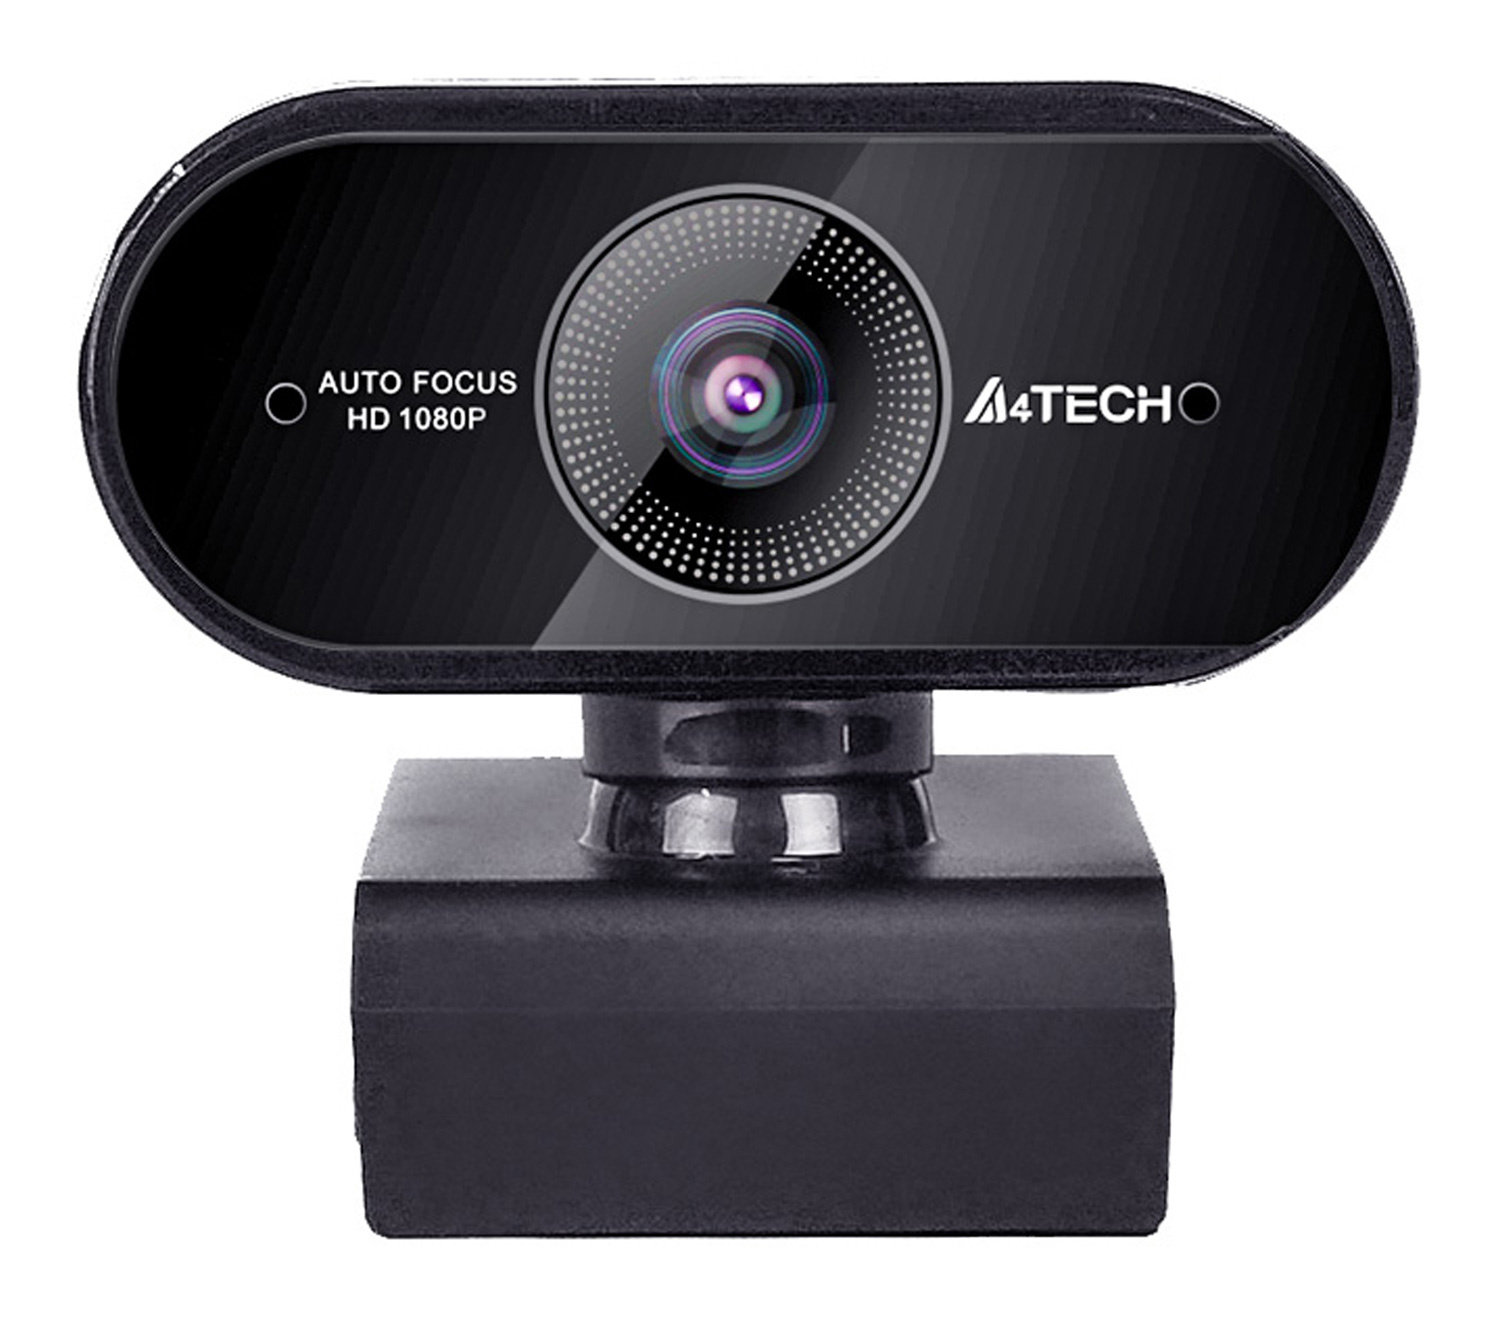 Камера Web A4 PK-930HA черный 2Mpix (1920x1080) USB2.0 с микрофоном